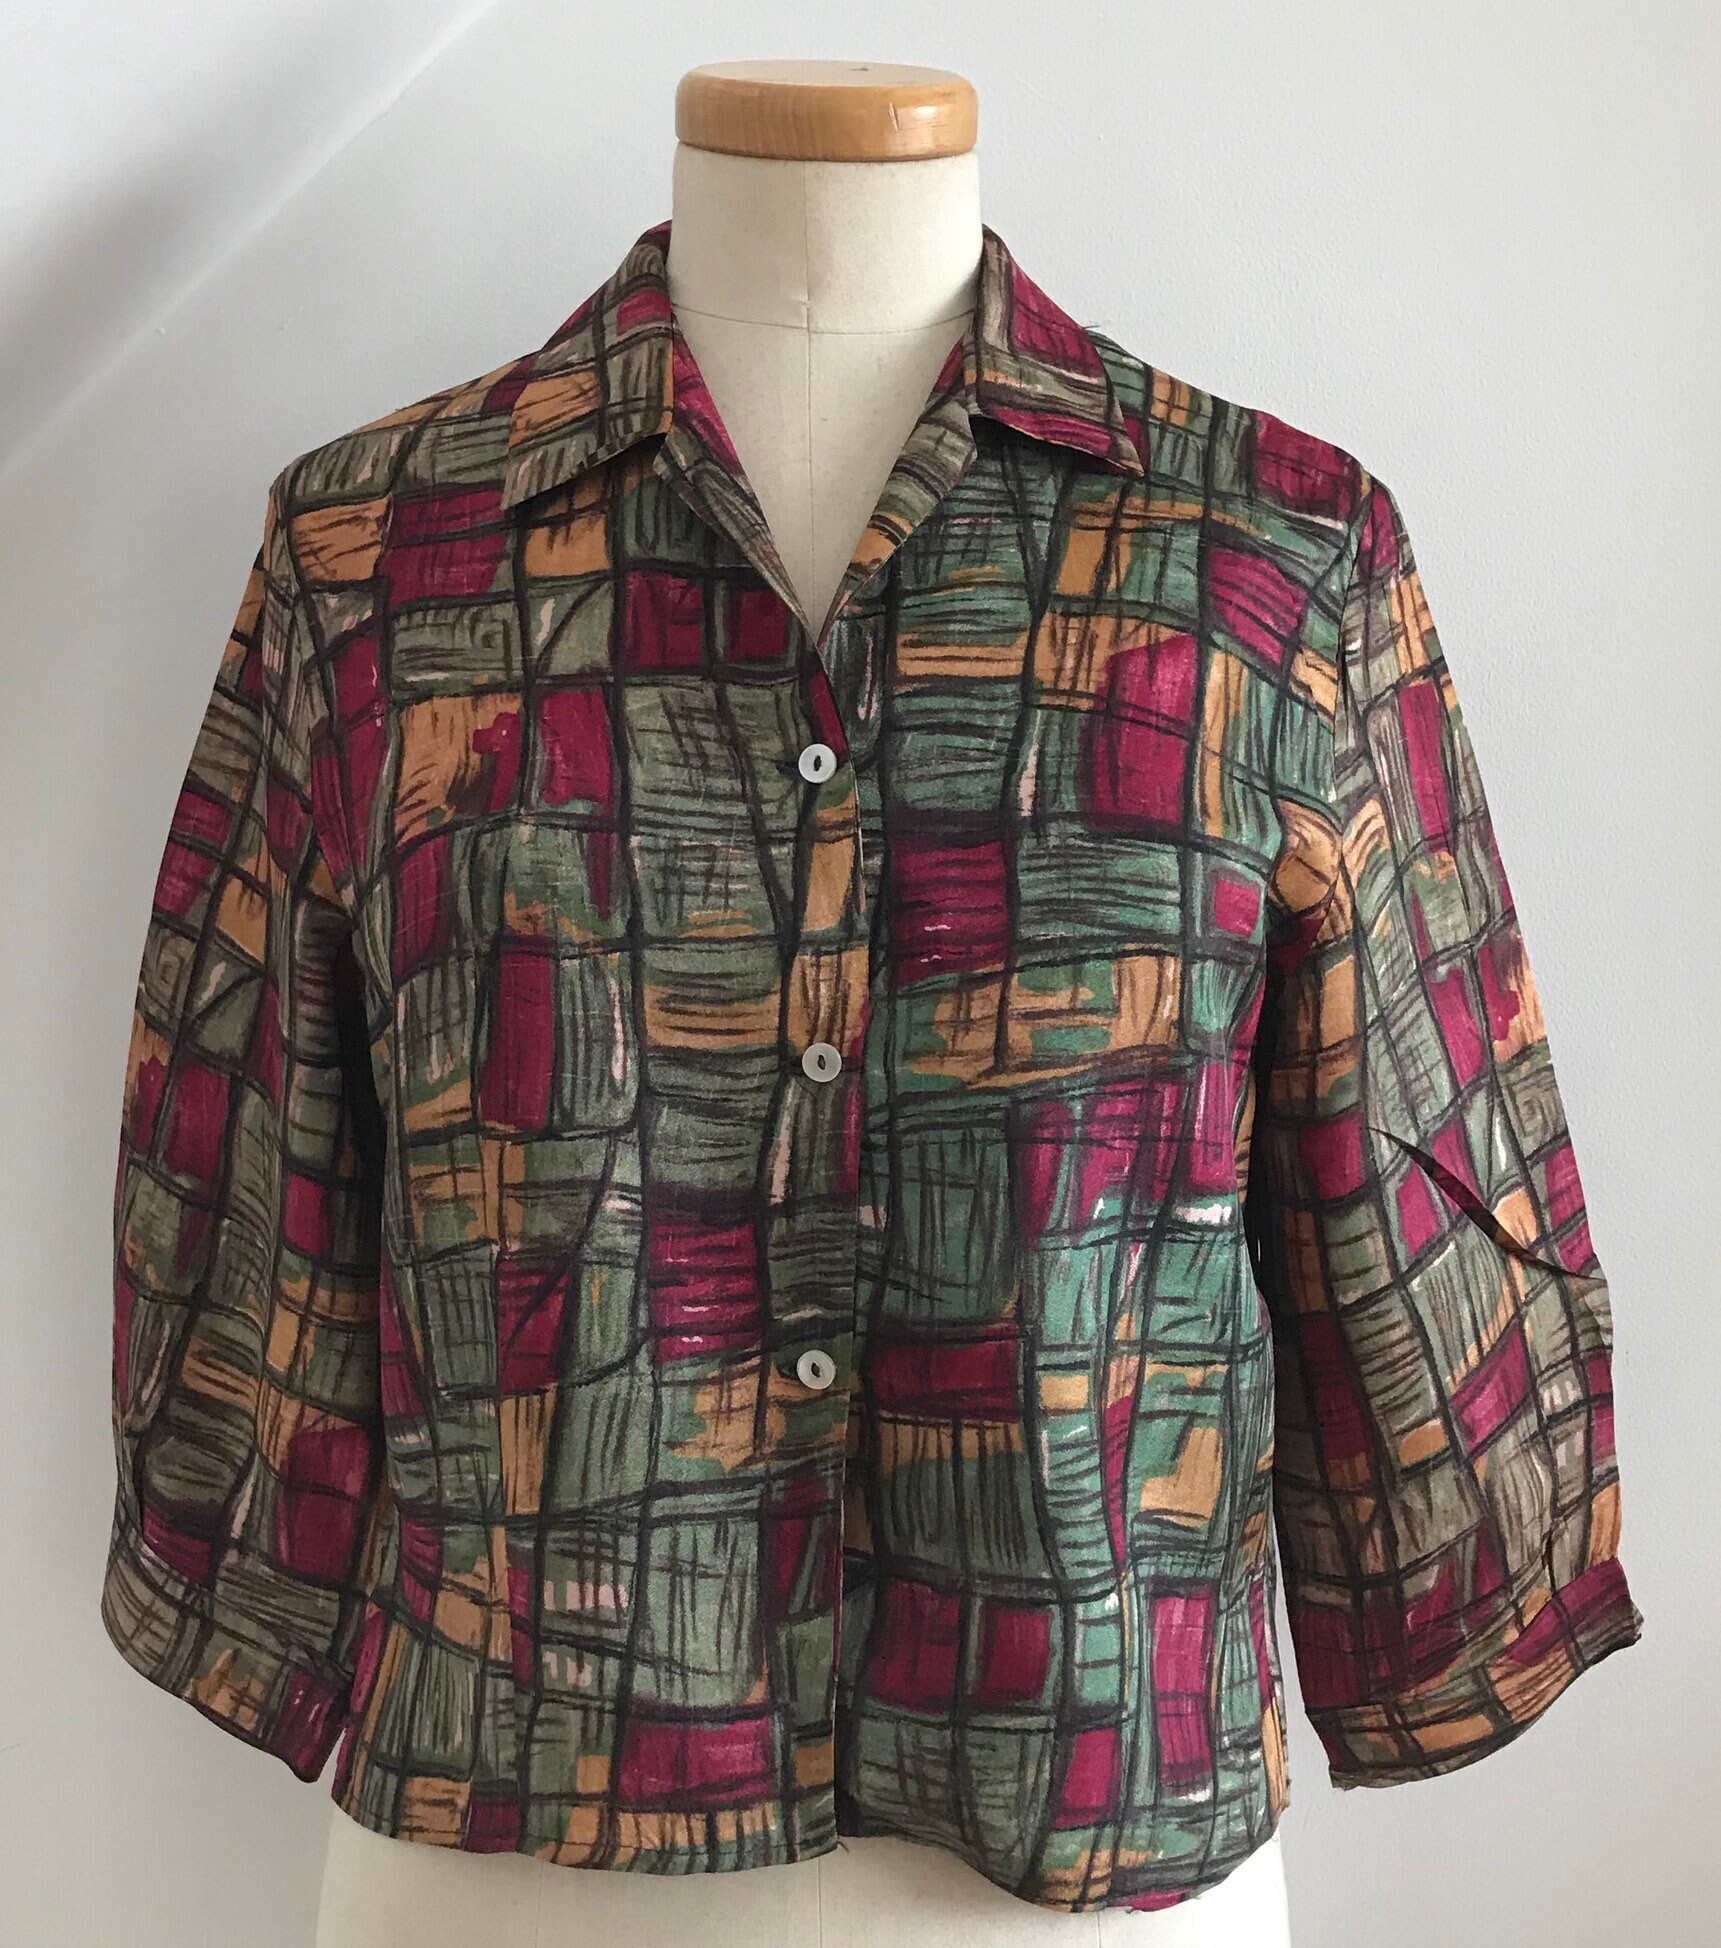 Fab Vintage 1950s Shirt Blouse Stunning Vivid Print Crop Top 50s Bombshell